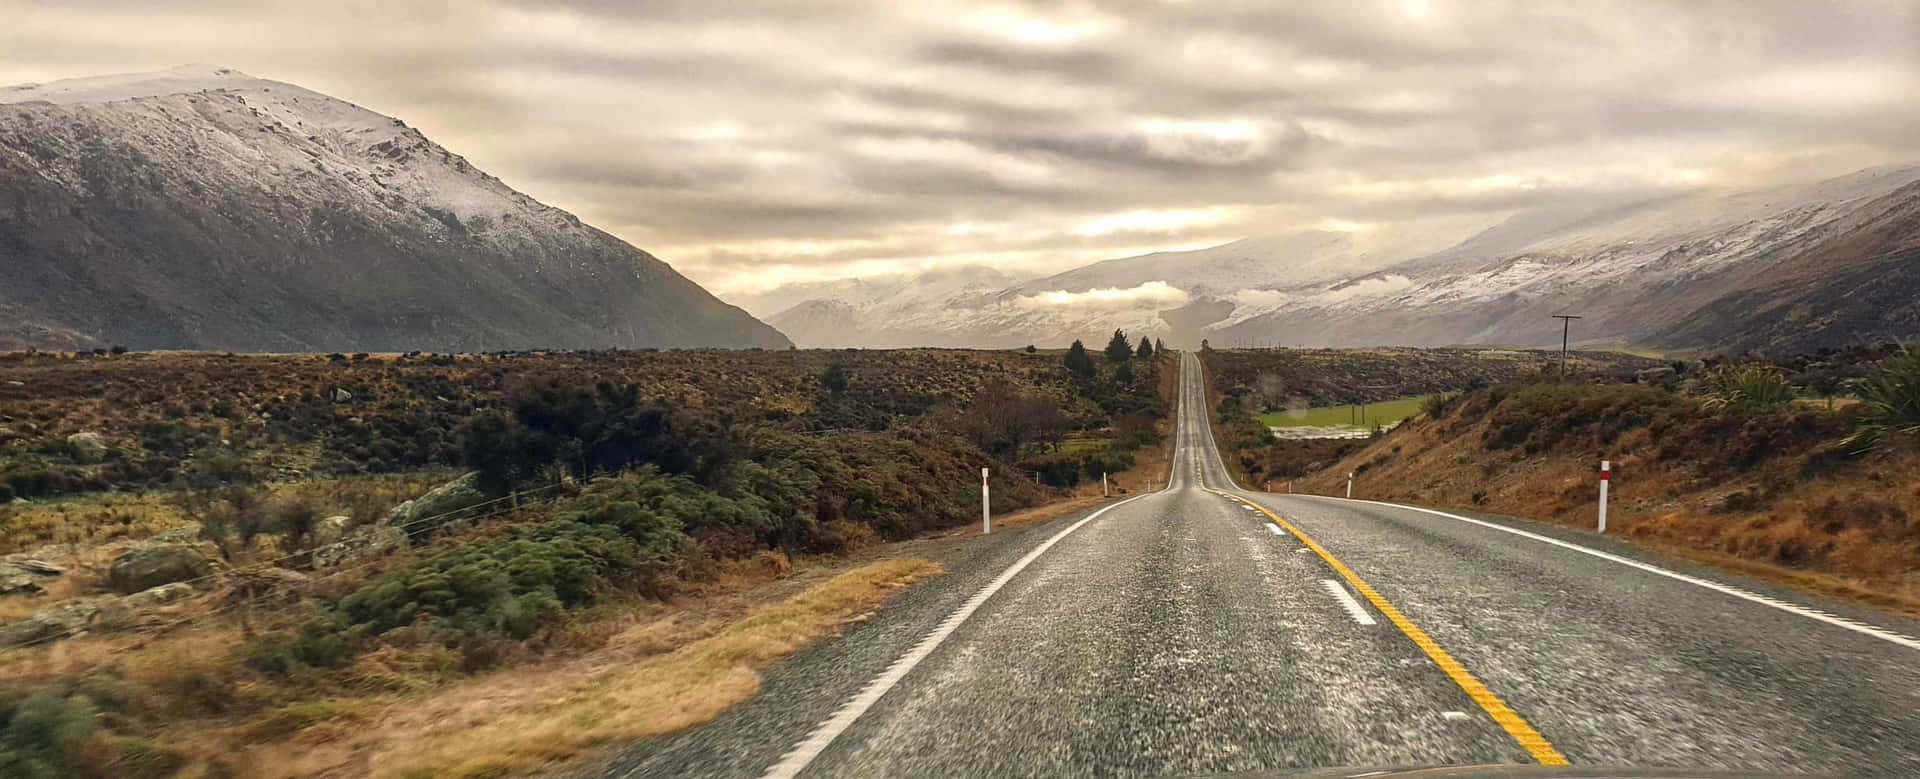 New Zealand Road Mountain View Wallpaper